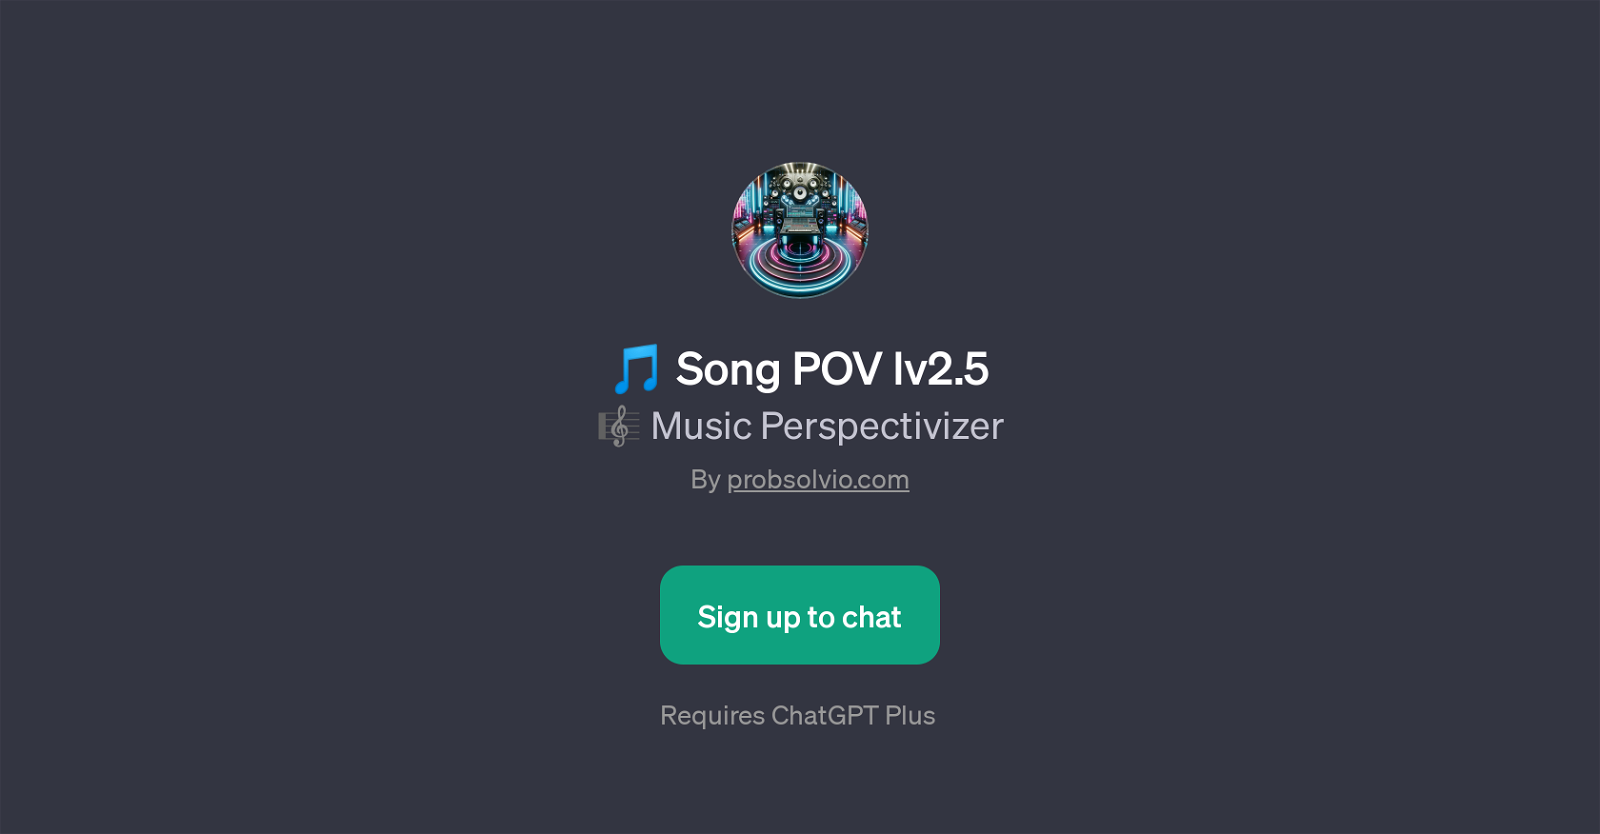 Song POV lv2.5 website